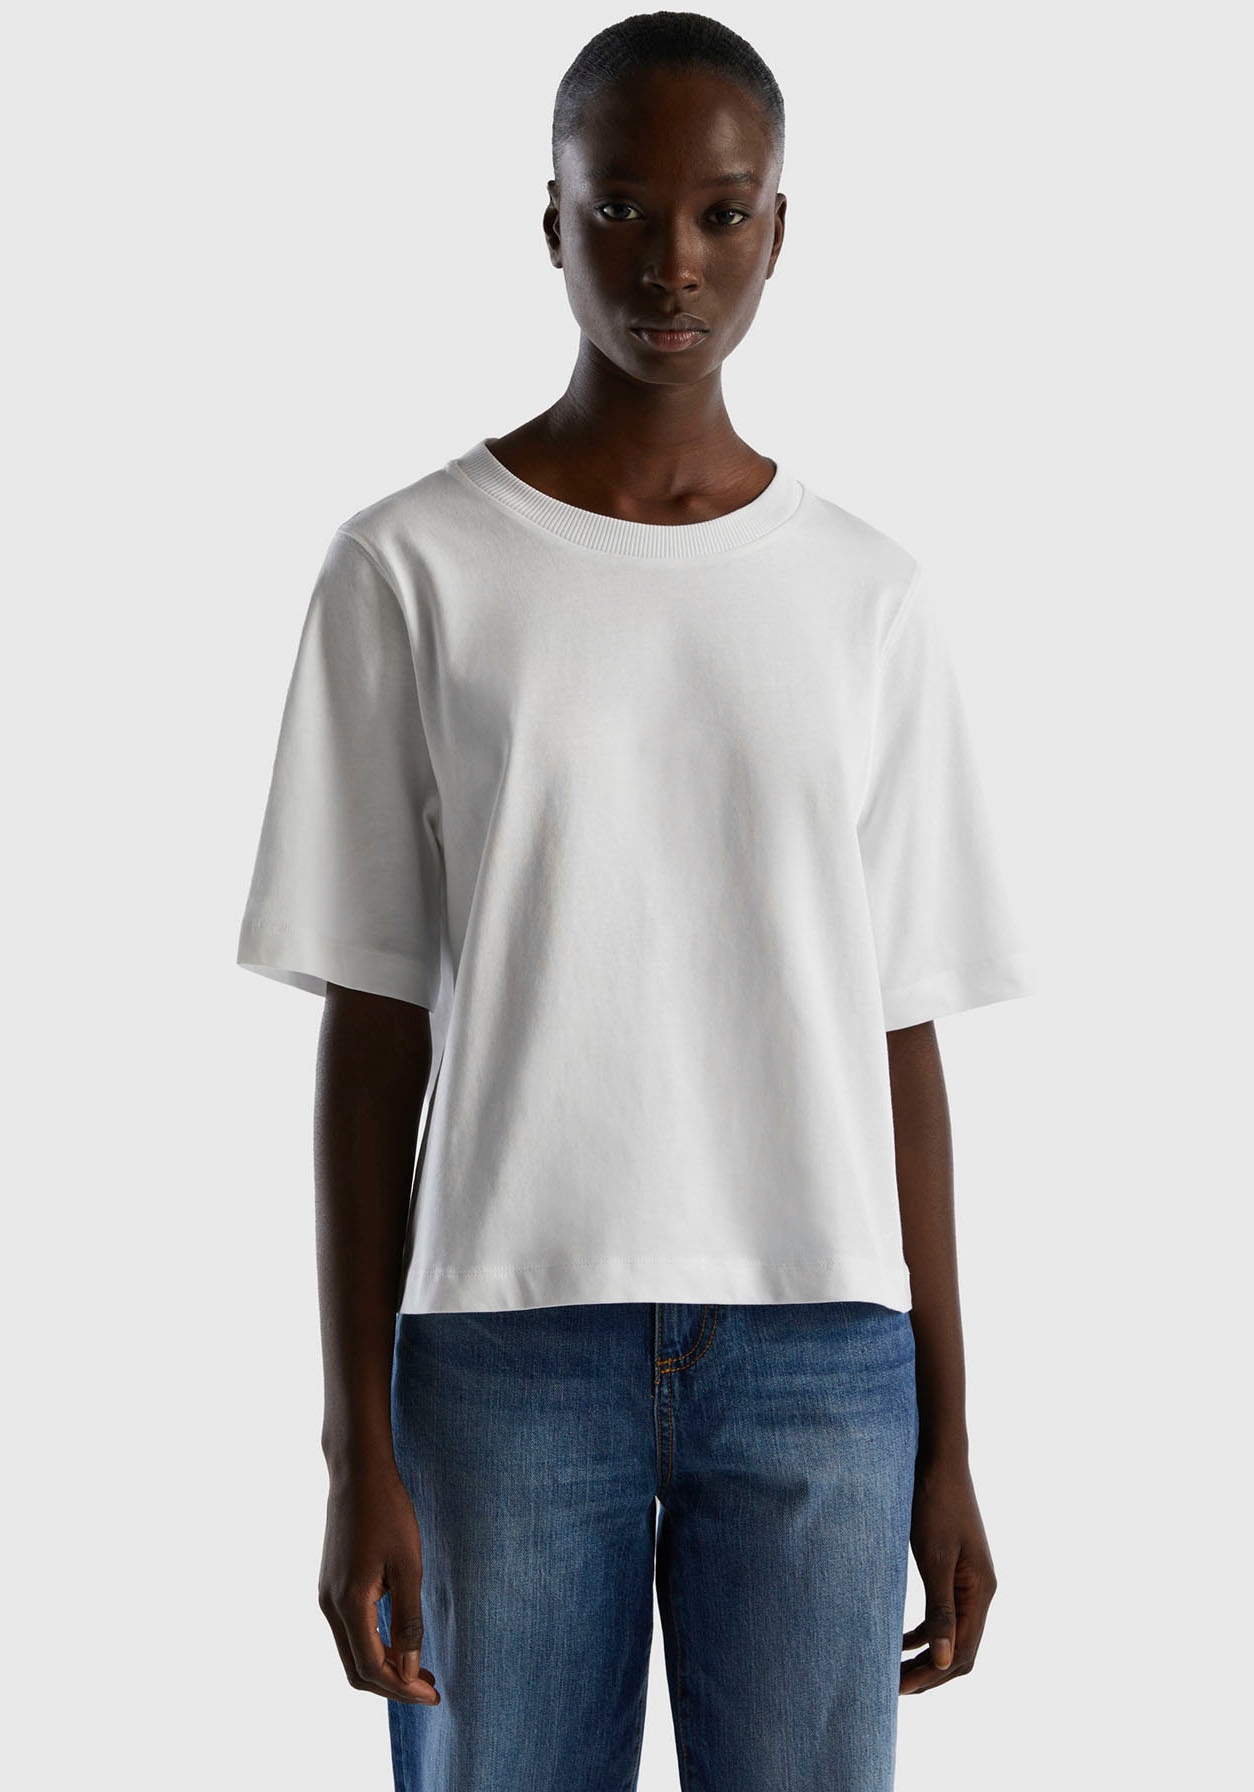 im walking Benetton | Colors of bestellen Basic United T-Shirt, I\'m Look